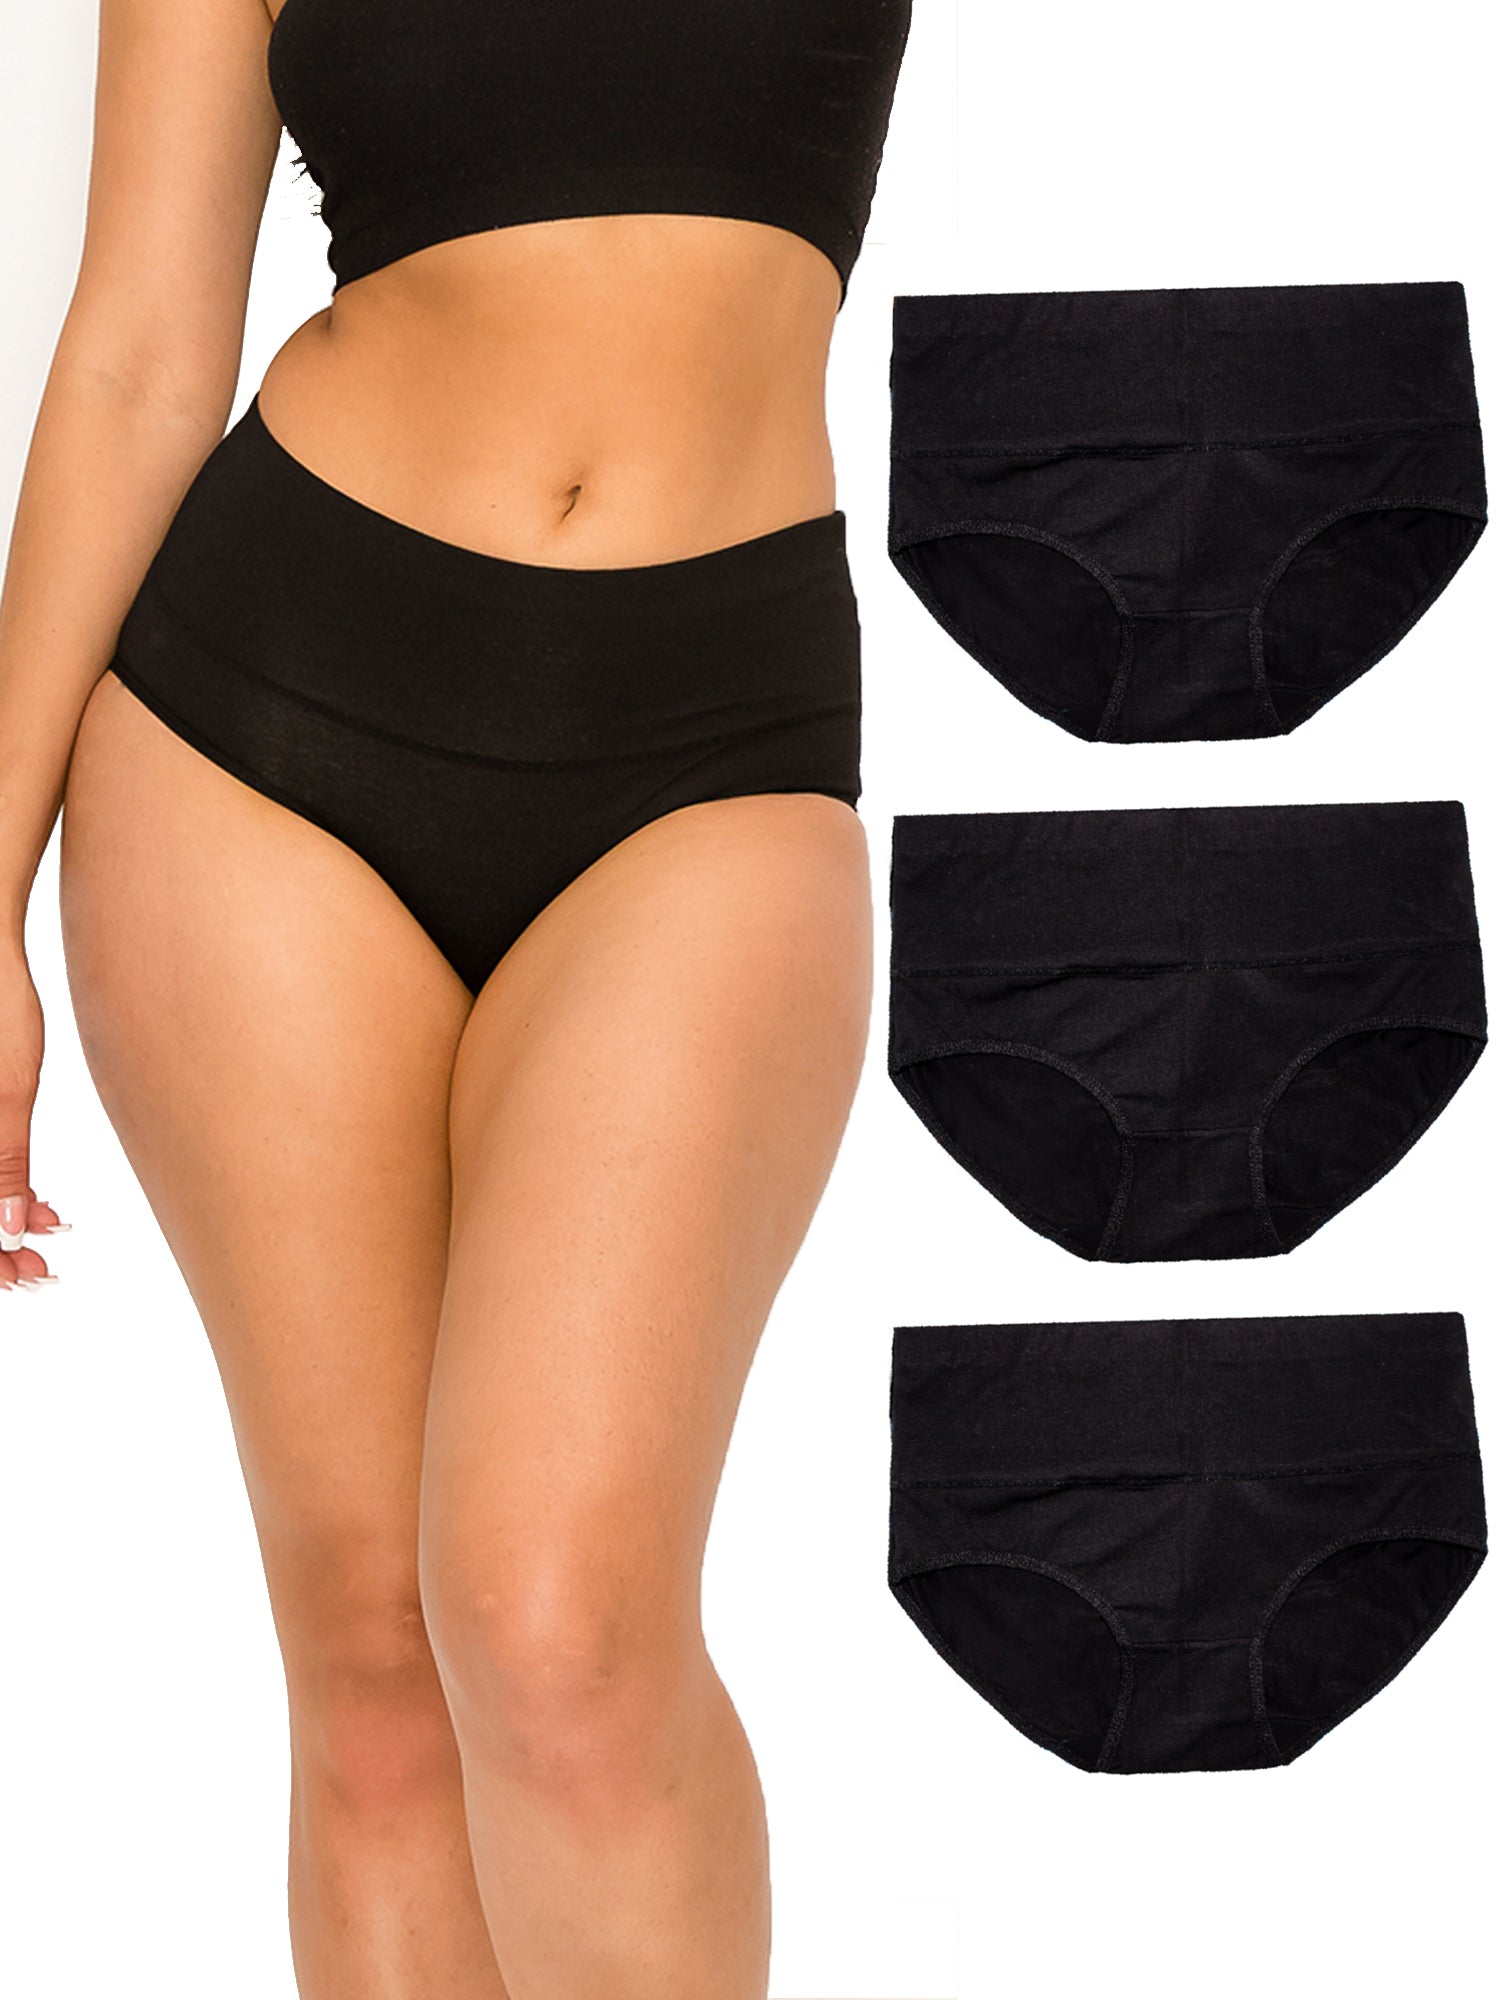  Period Underwear For Women Heavy Flow High Waisted Menstrual  Panties Teens Cotton Postpartum Hipster 3 Pack XS